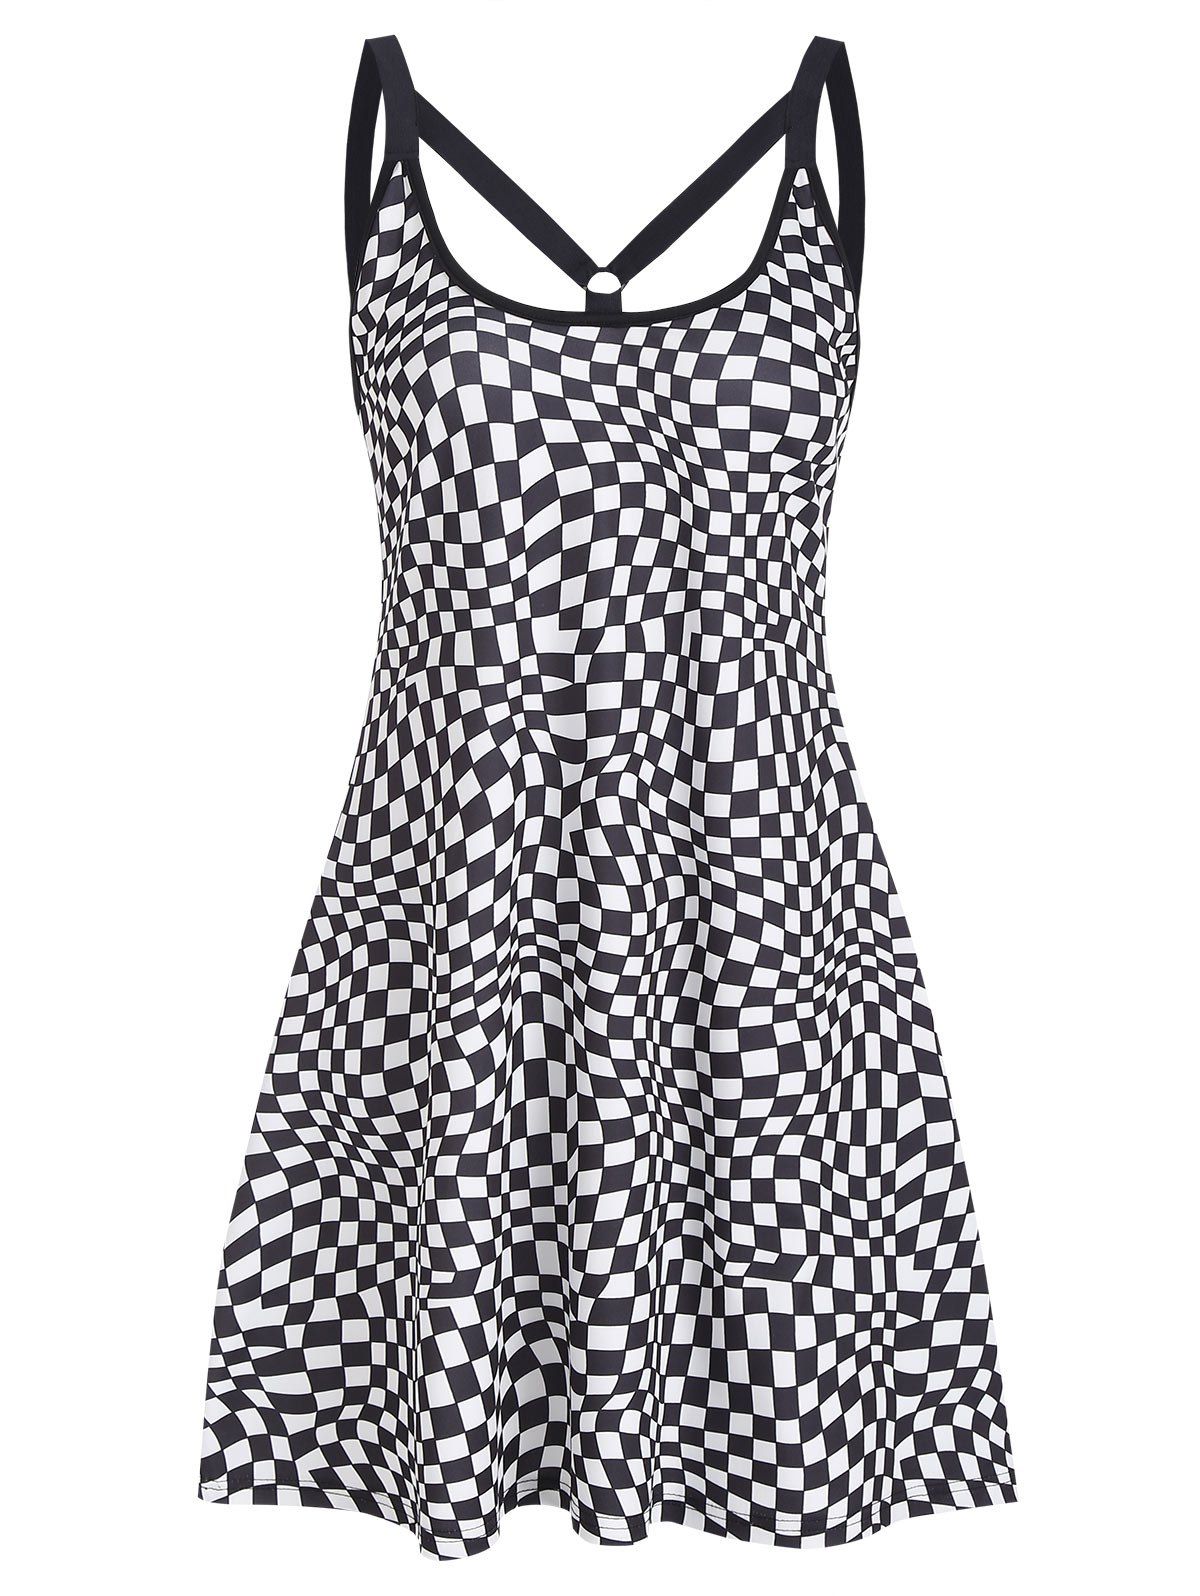 O Ring Strappy Checkerboard Print Tank Dress - BLACK S